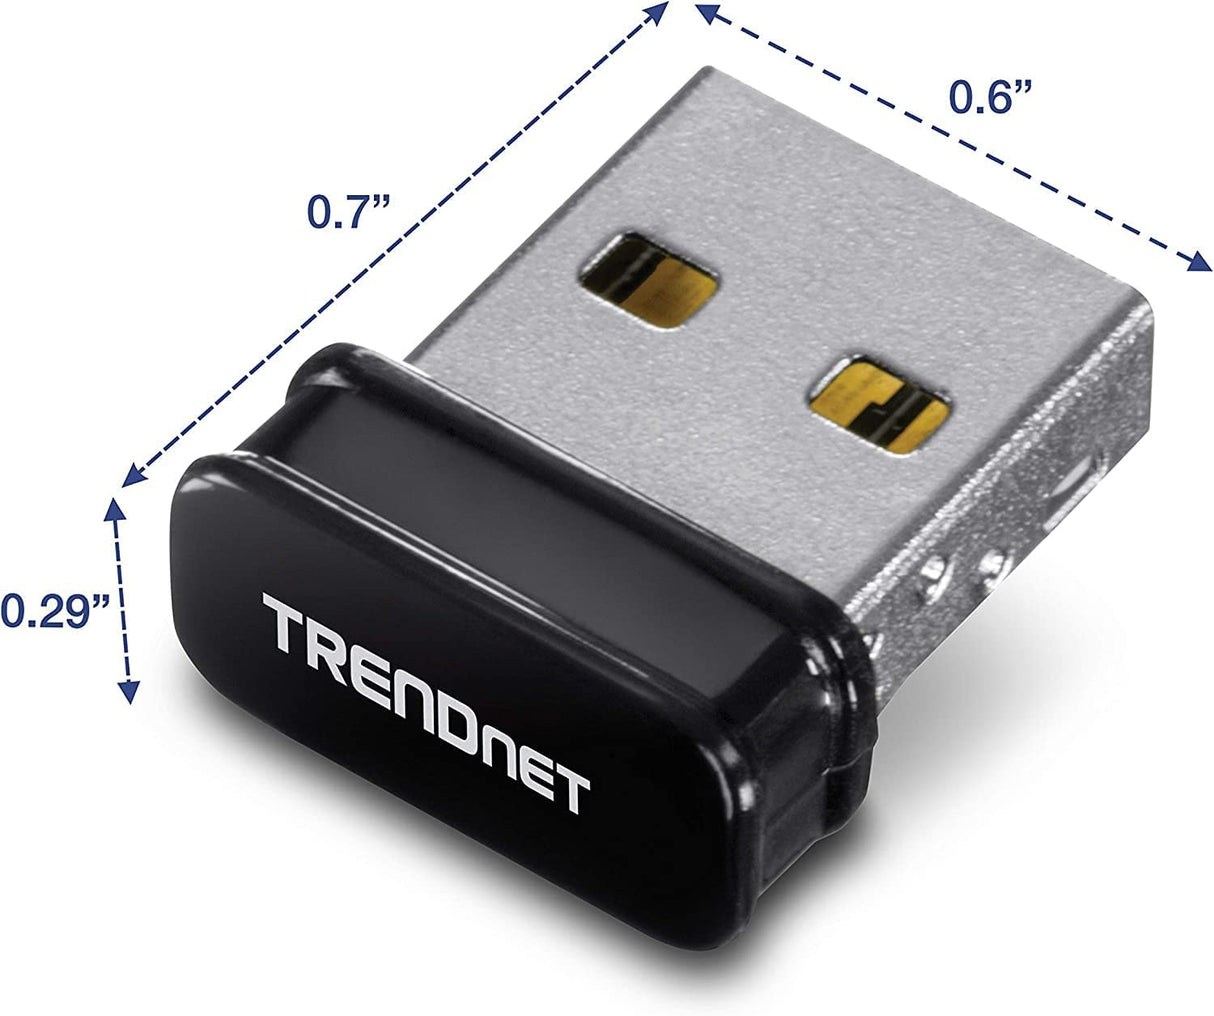 TRENDnet Wireless N150 Micro USB Adapter, WPA2 Encryption, Easy Setup, Ultra Compact Design, QoS, Windows &amp; Mac Compatible, TEW-648UBM